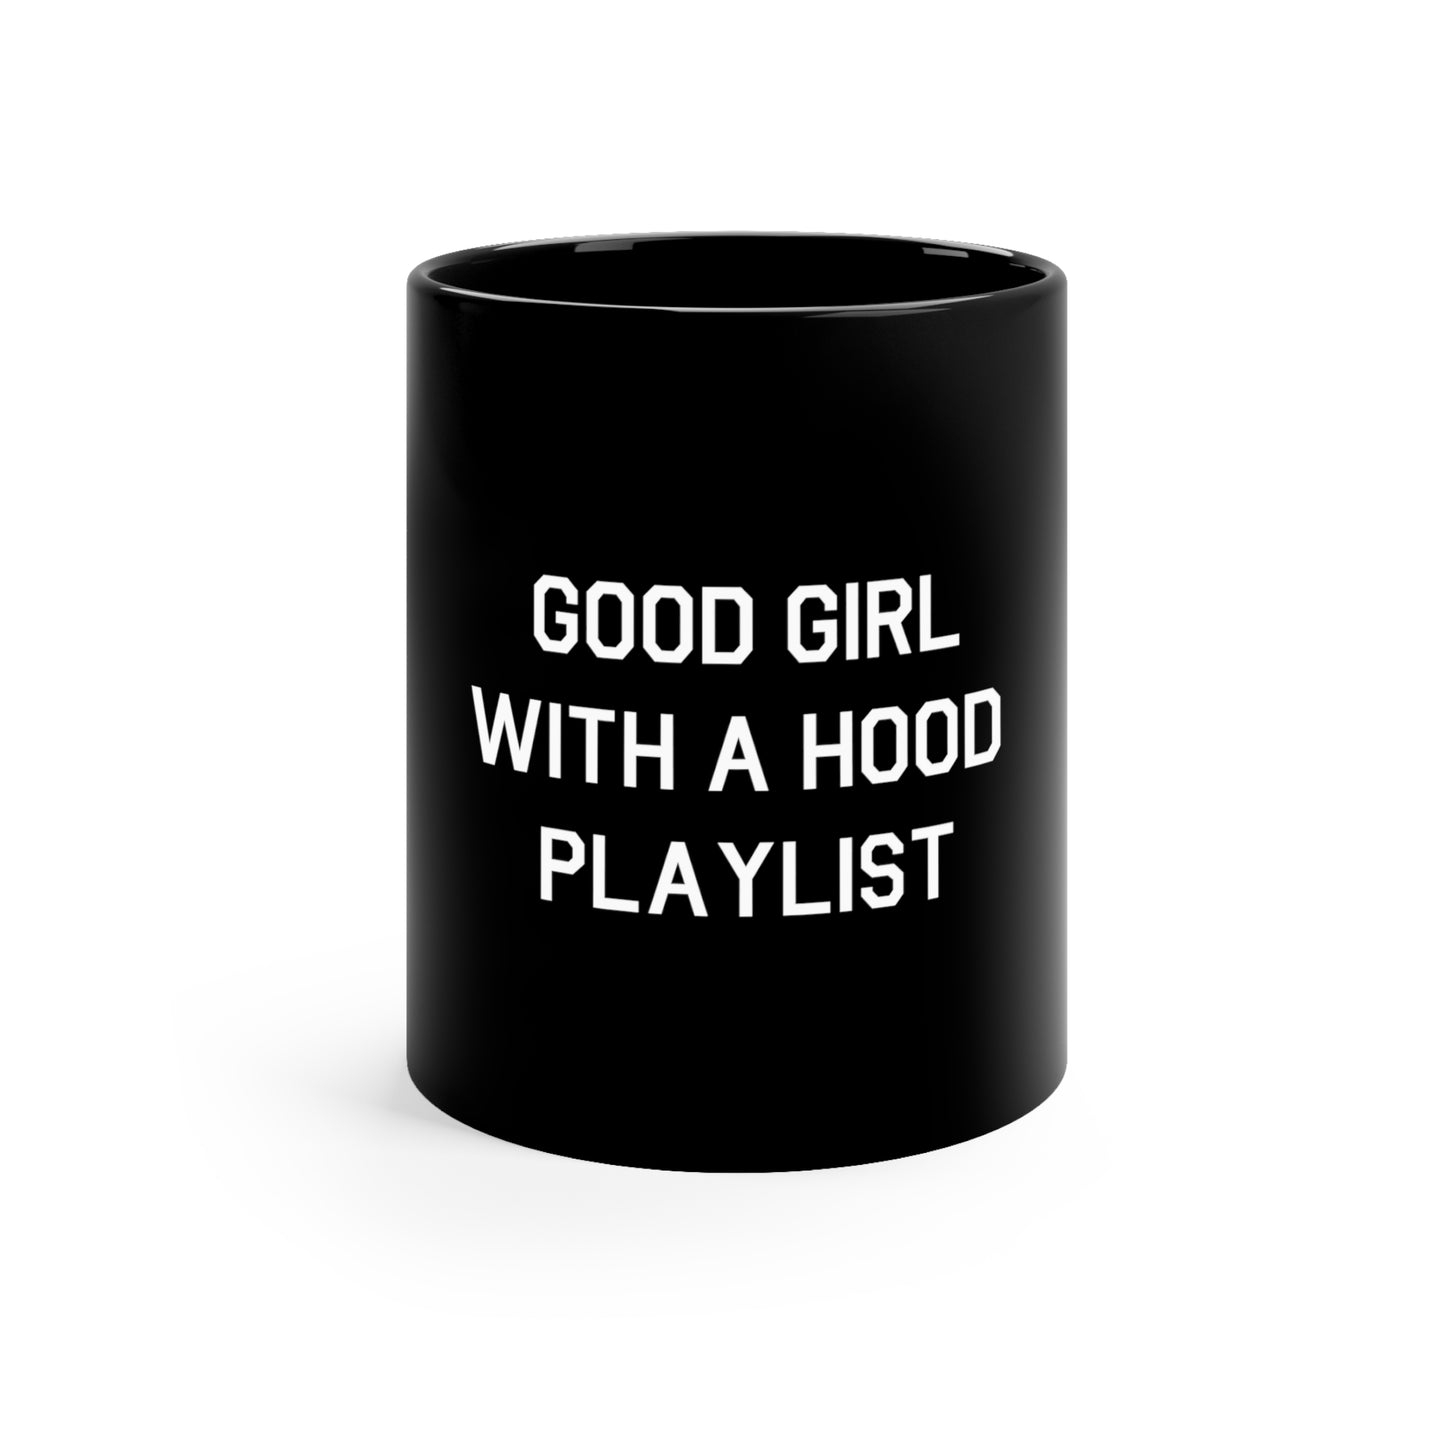 Good Girl With A Hood Playlist 11oz Black Mug Great gift for a Good Girl With A Hood Playlist